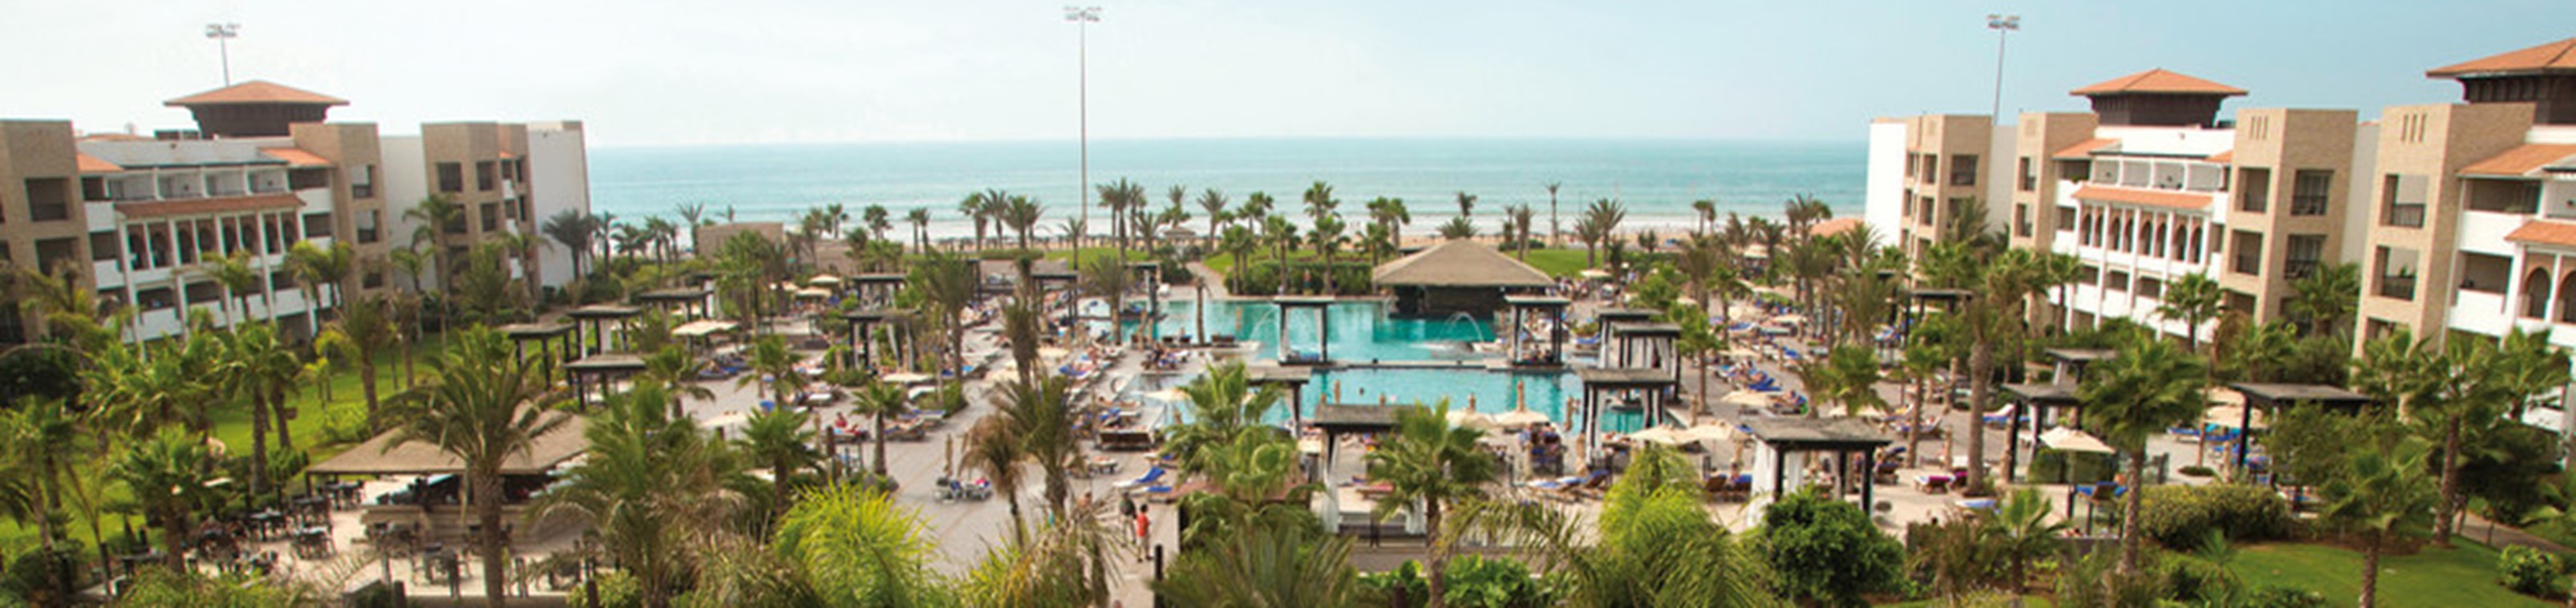 5* RIU hotel aan het strand en de promenade van Agadir